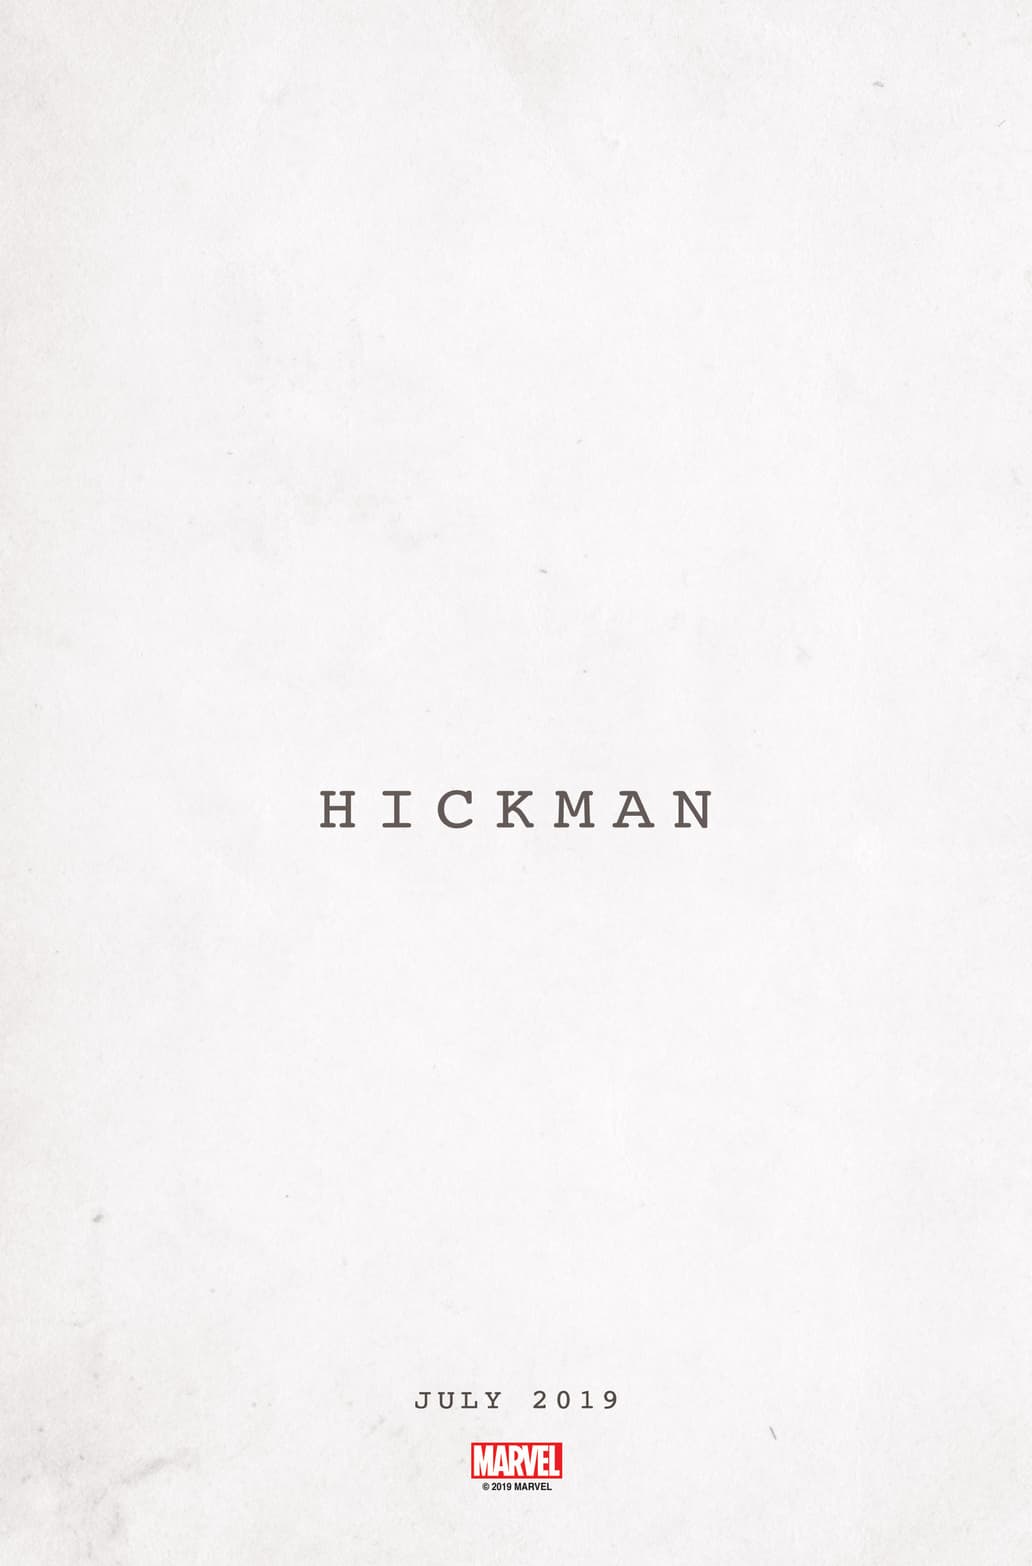 Hickman